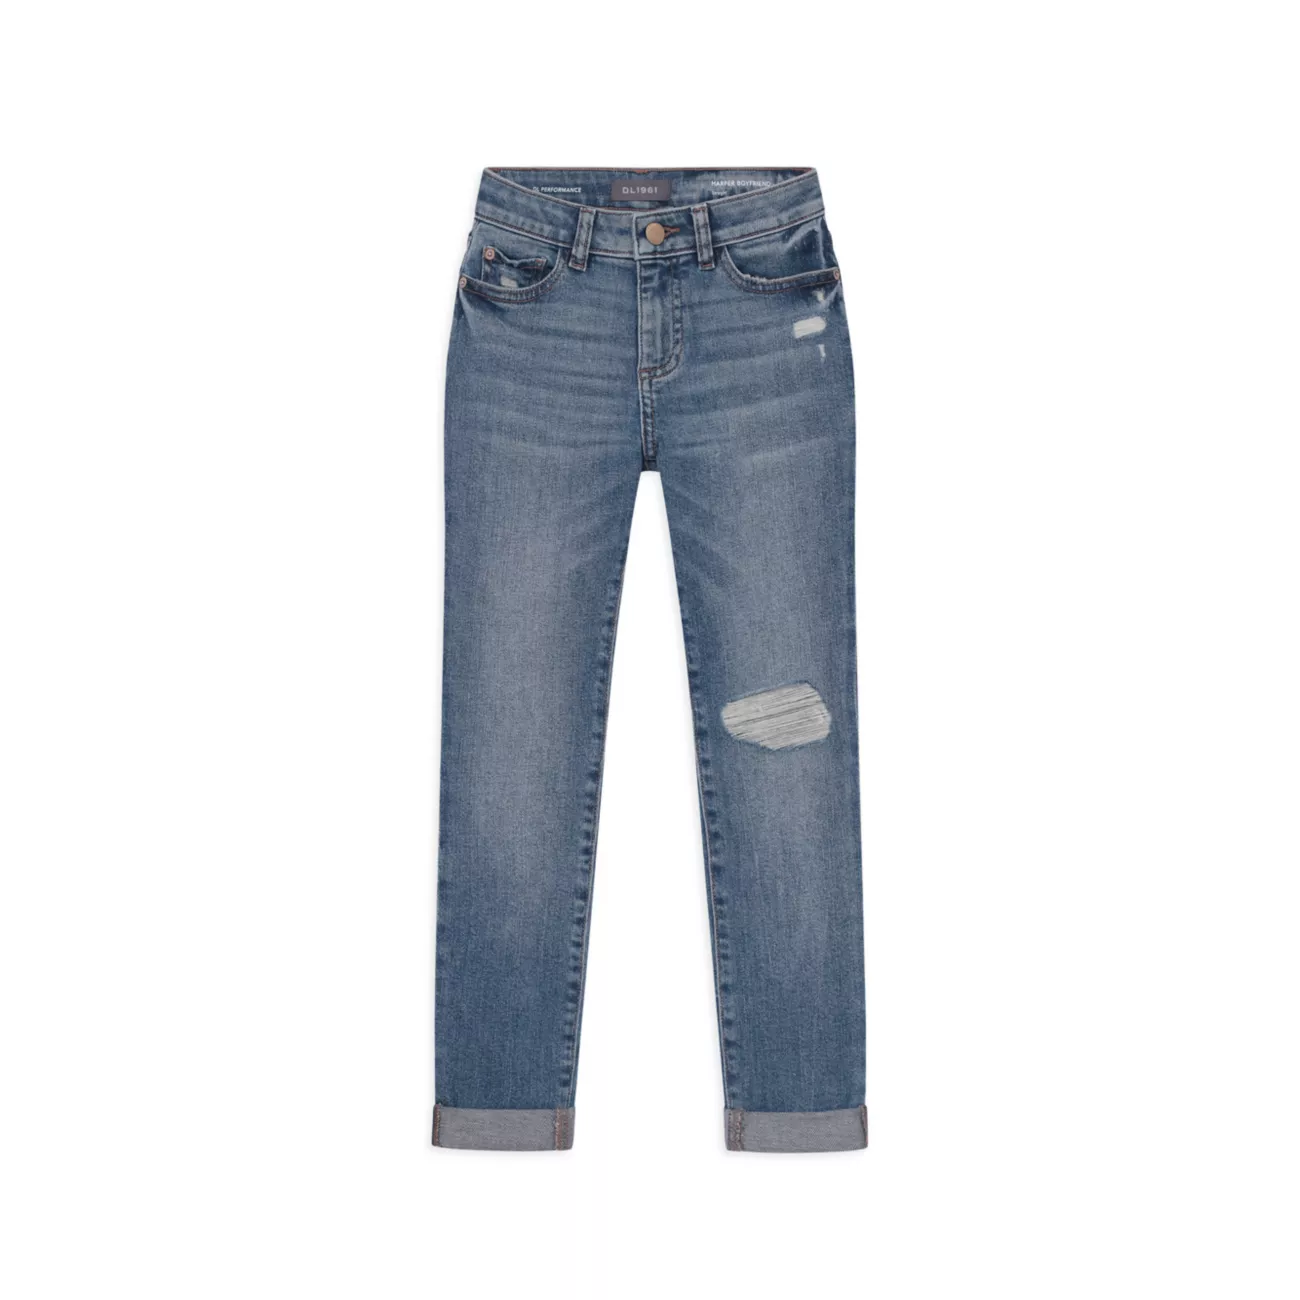 Little Kid's Harper Distressed Stretch Slim Jeans DL1961